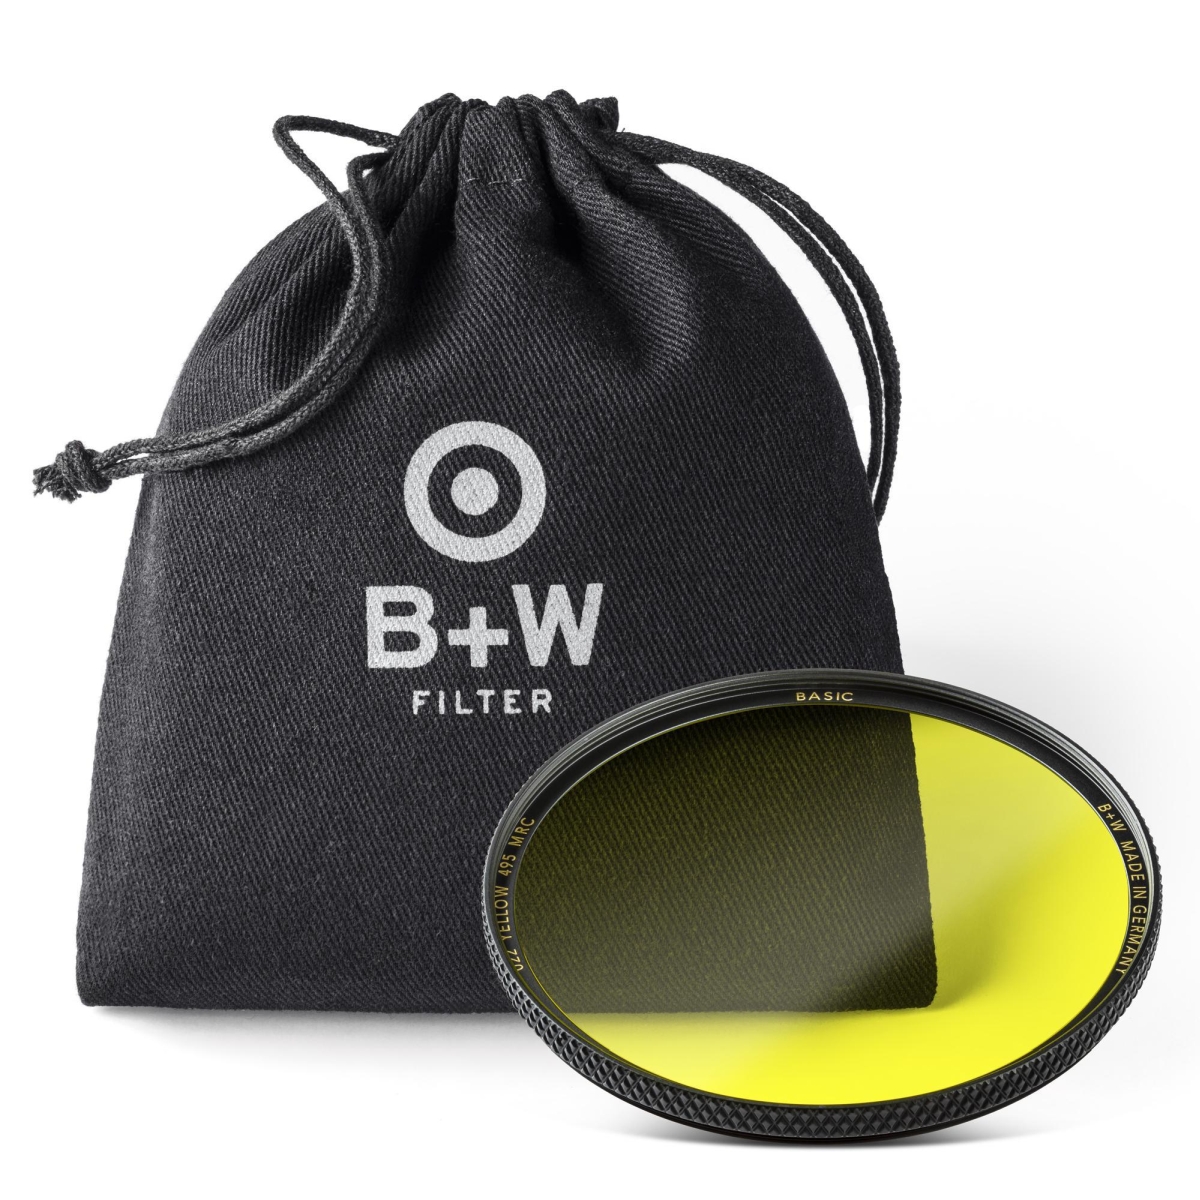 B+W Gelb Filter 52 mm 495 MRC Basic